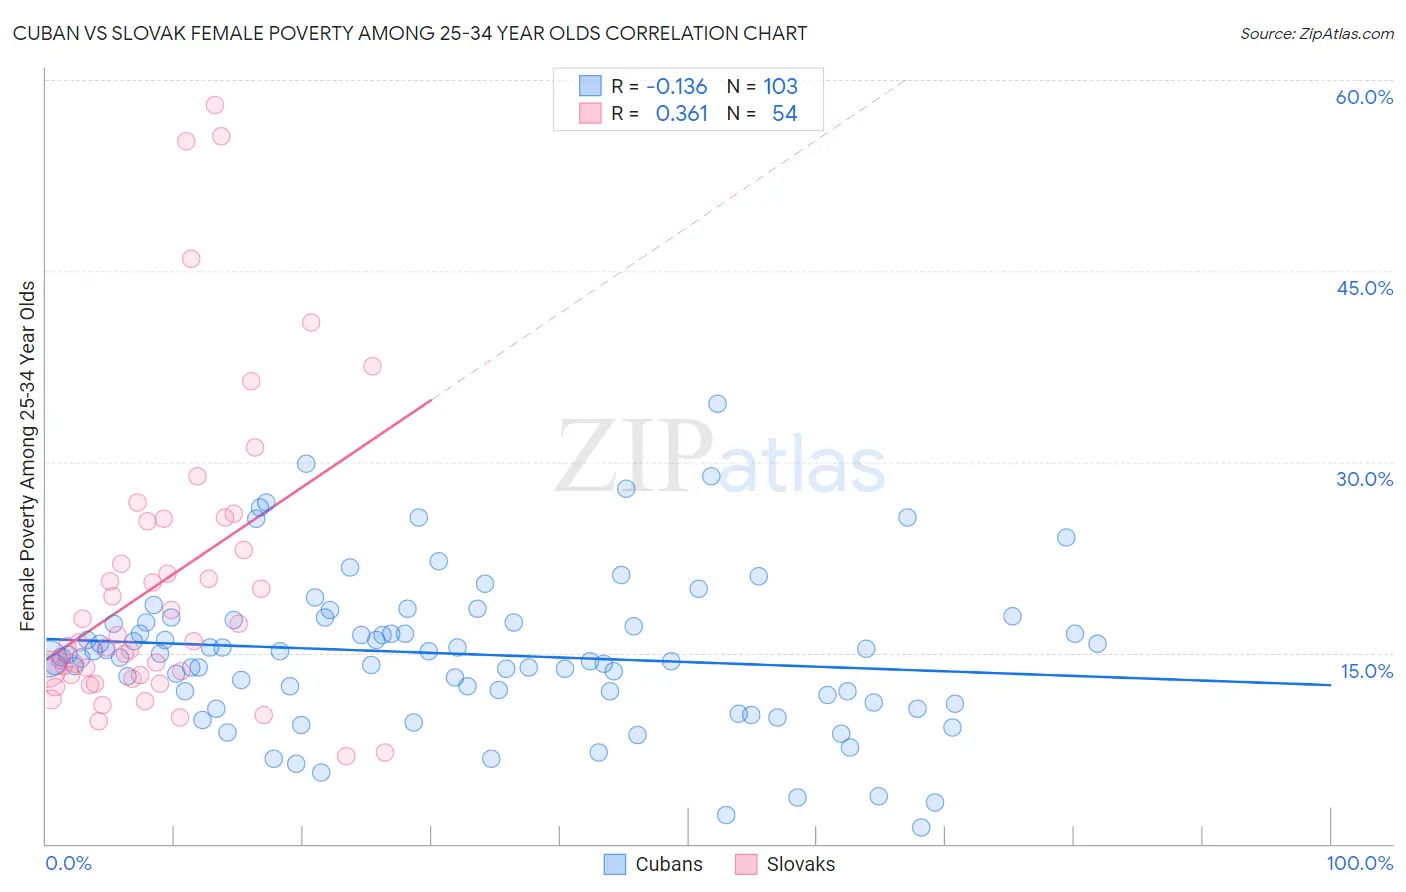 Cuban vs Slovak Female Poverty Among 25-34 Year Olds